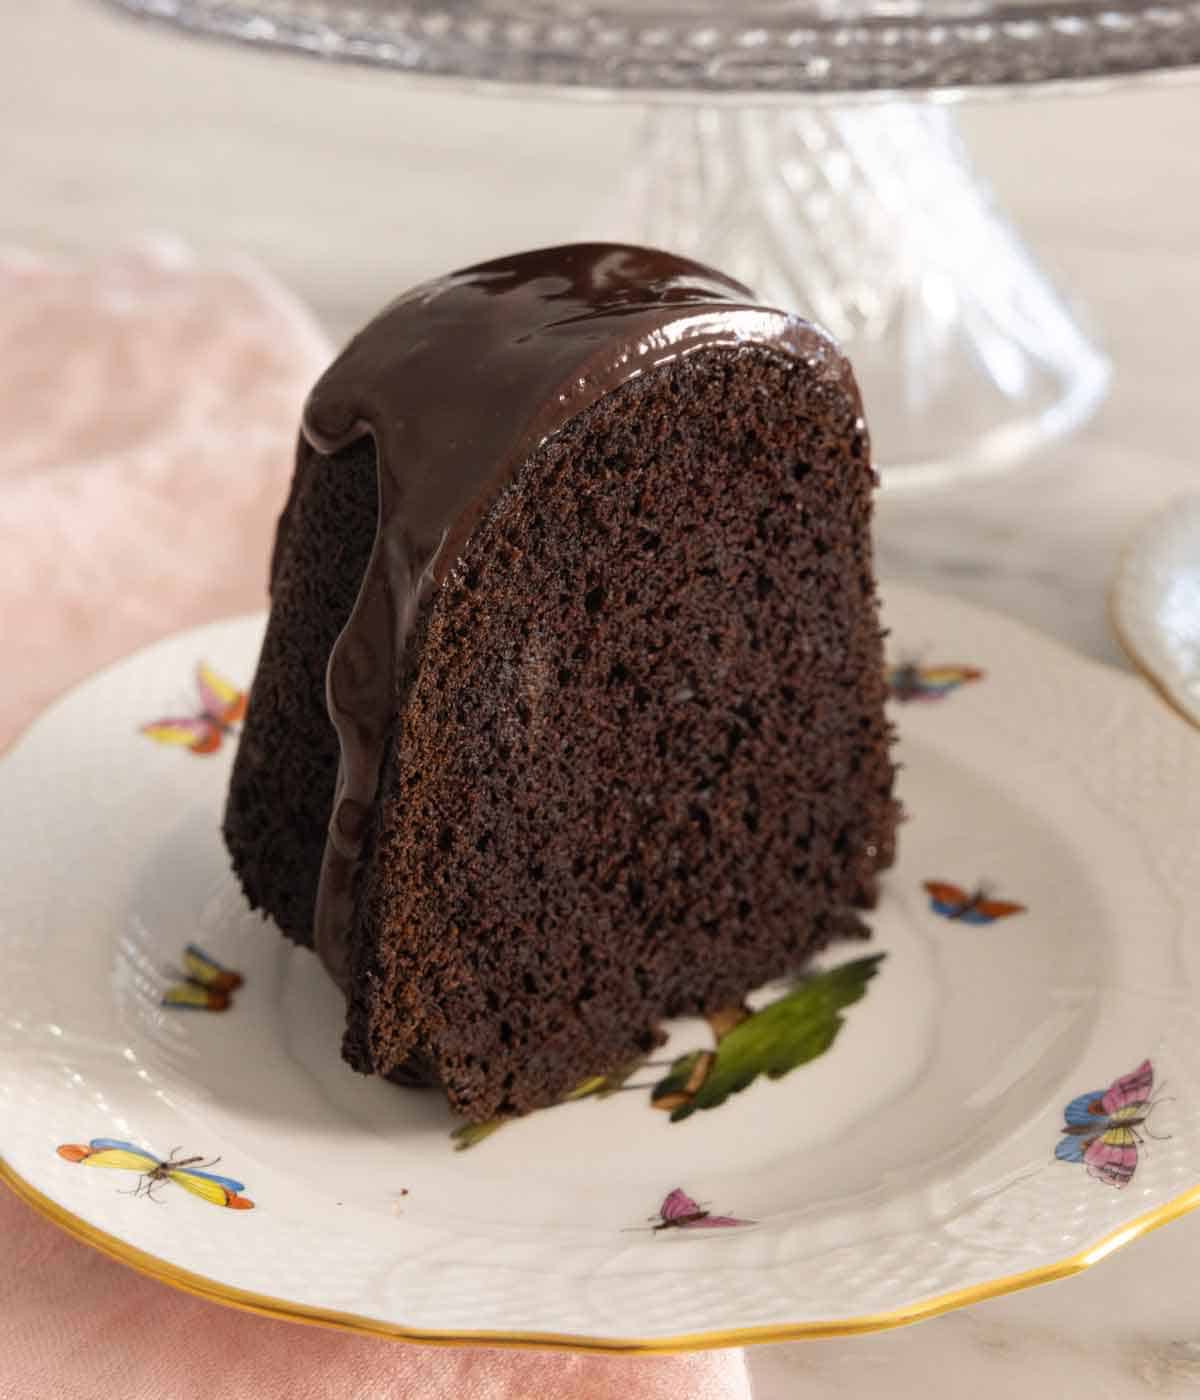 A slice of chocolate bundt cake on a plate.